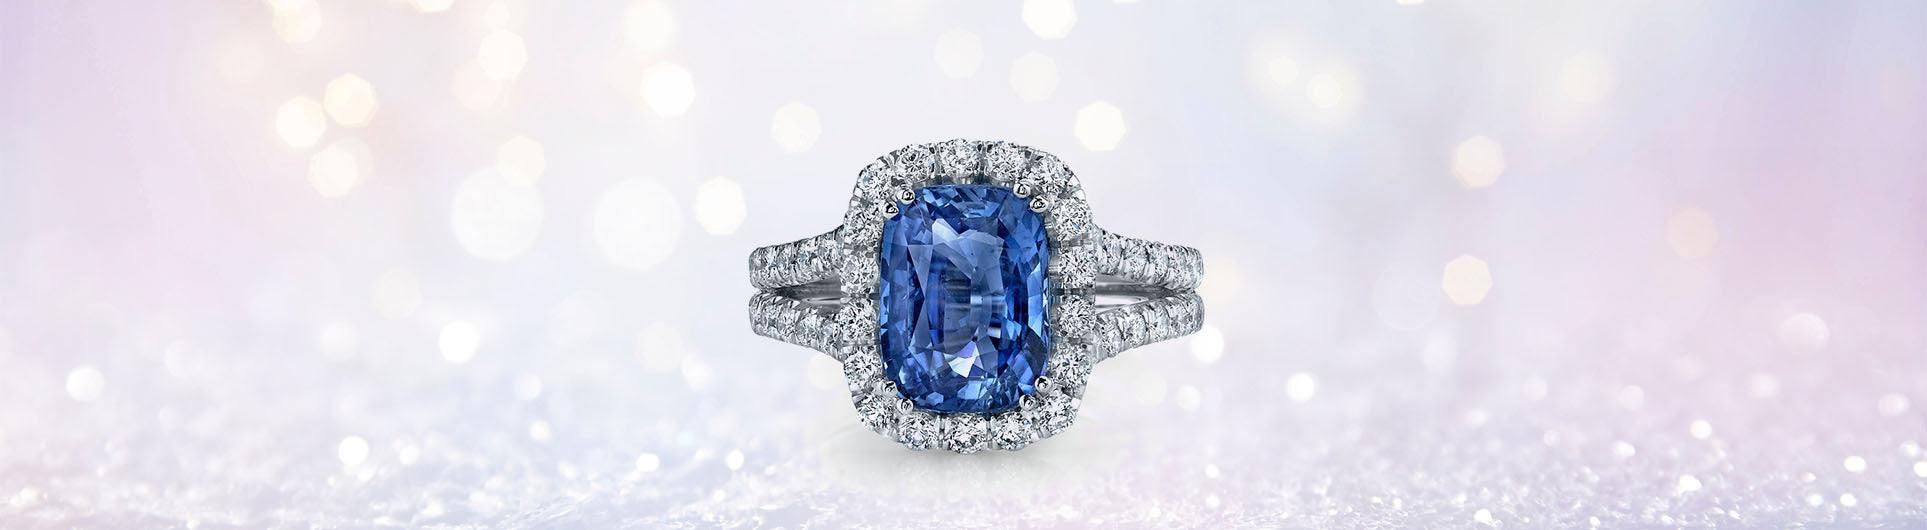 Gemstone Engagement Rings - Monroe Yorke Diamonds